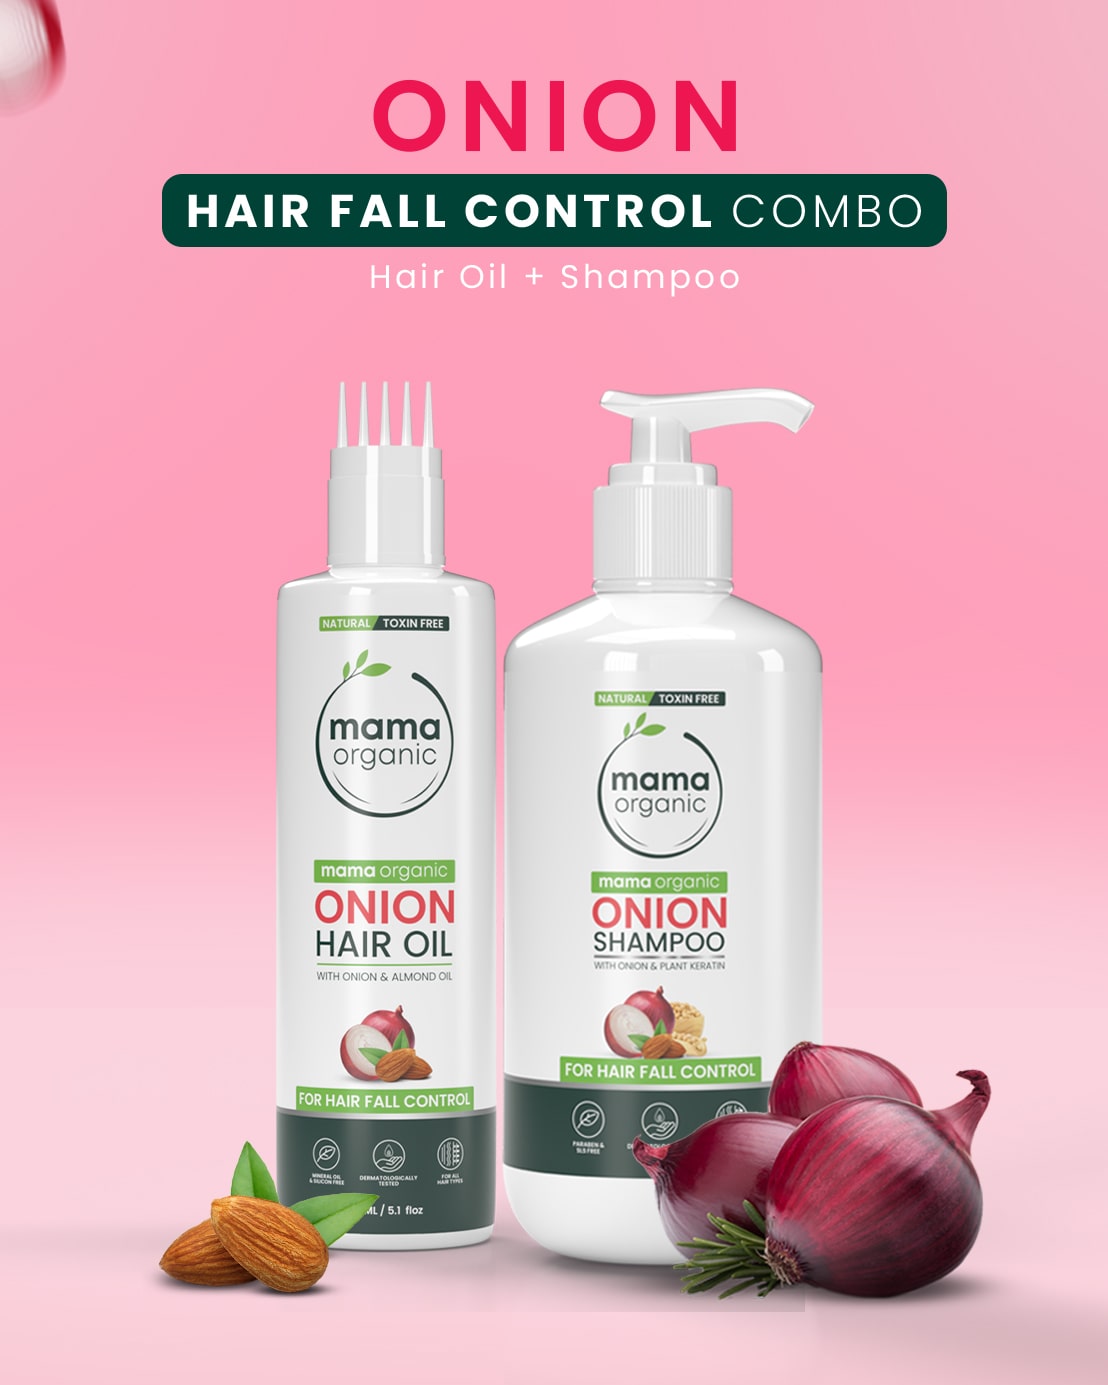 Onion Hair Fall Control Combo Hair Oil + Shampoo